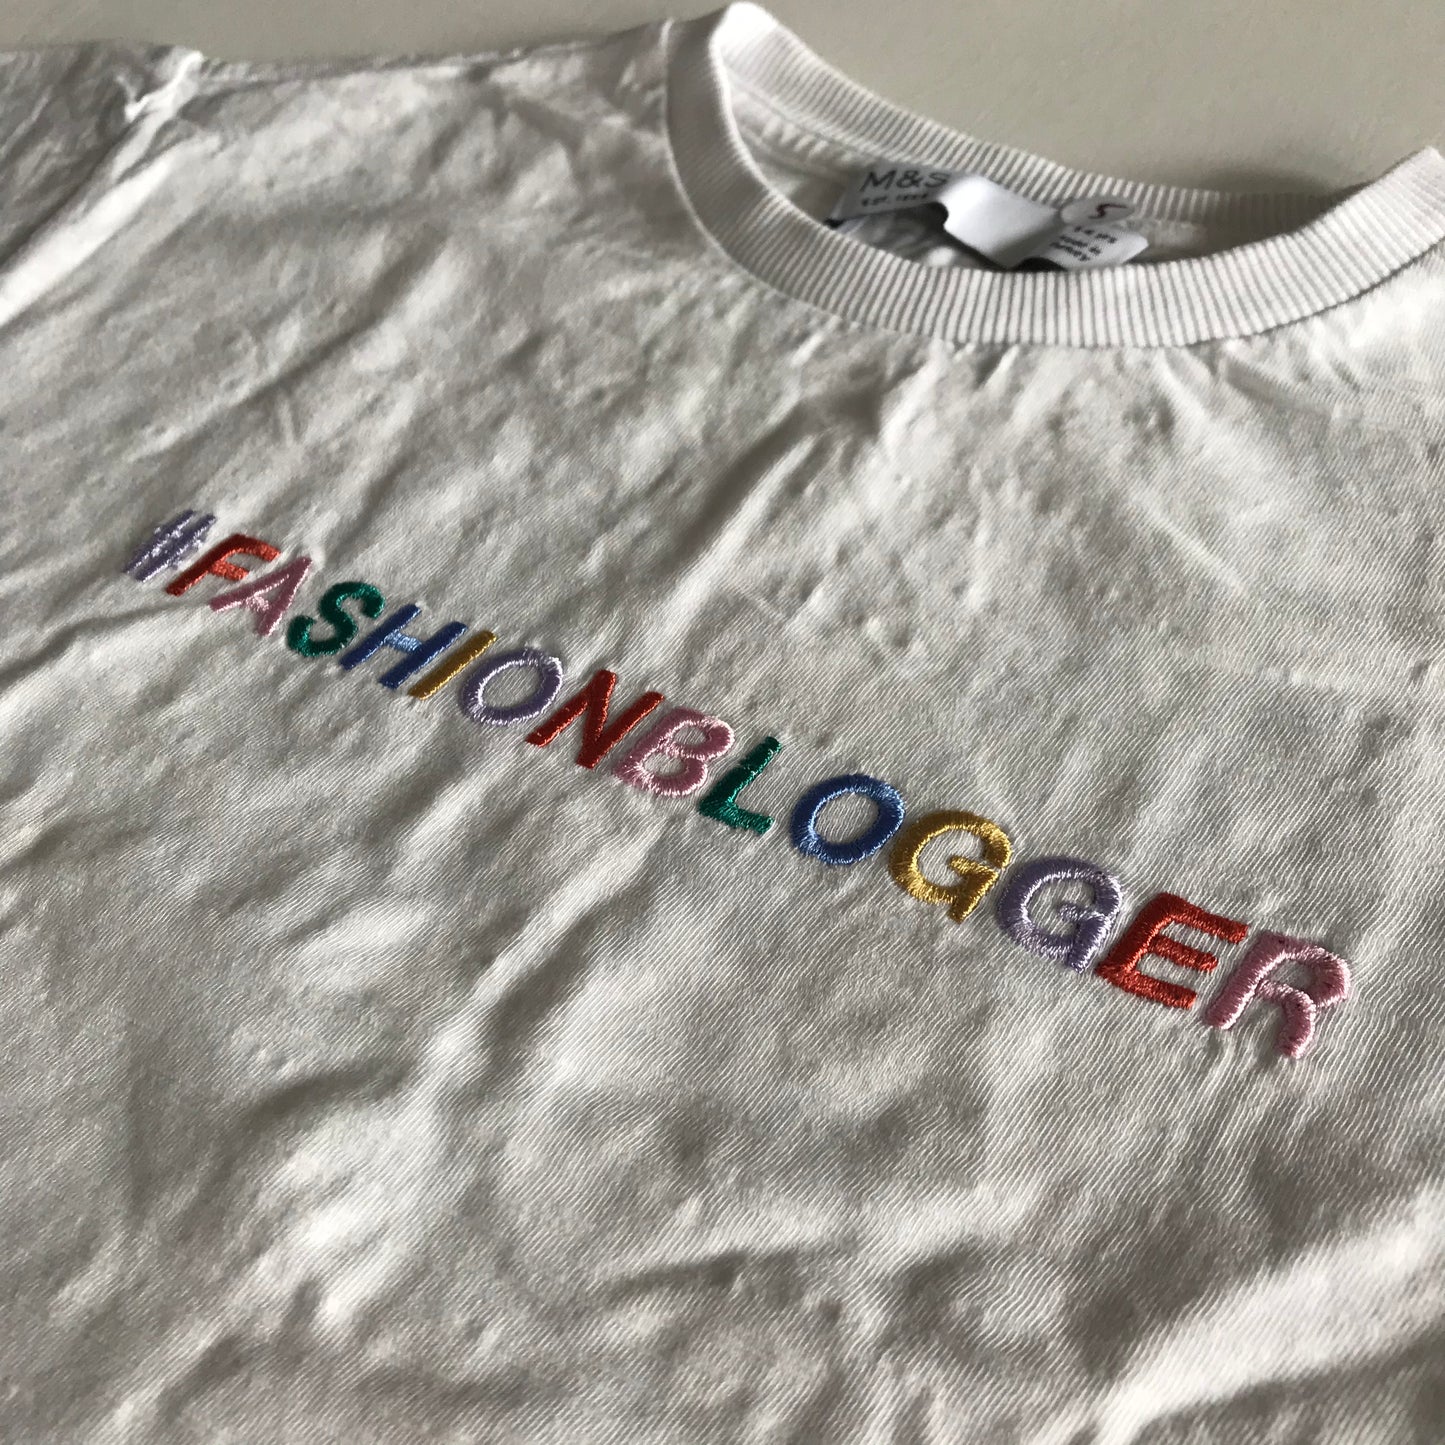 T-shirt - '#Fashionblogger' - Age 5